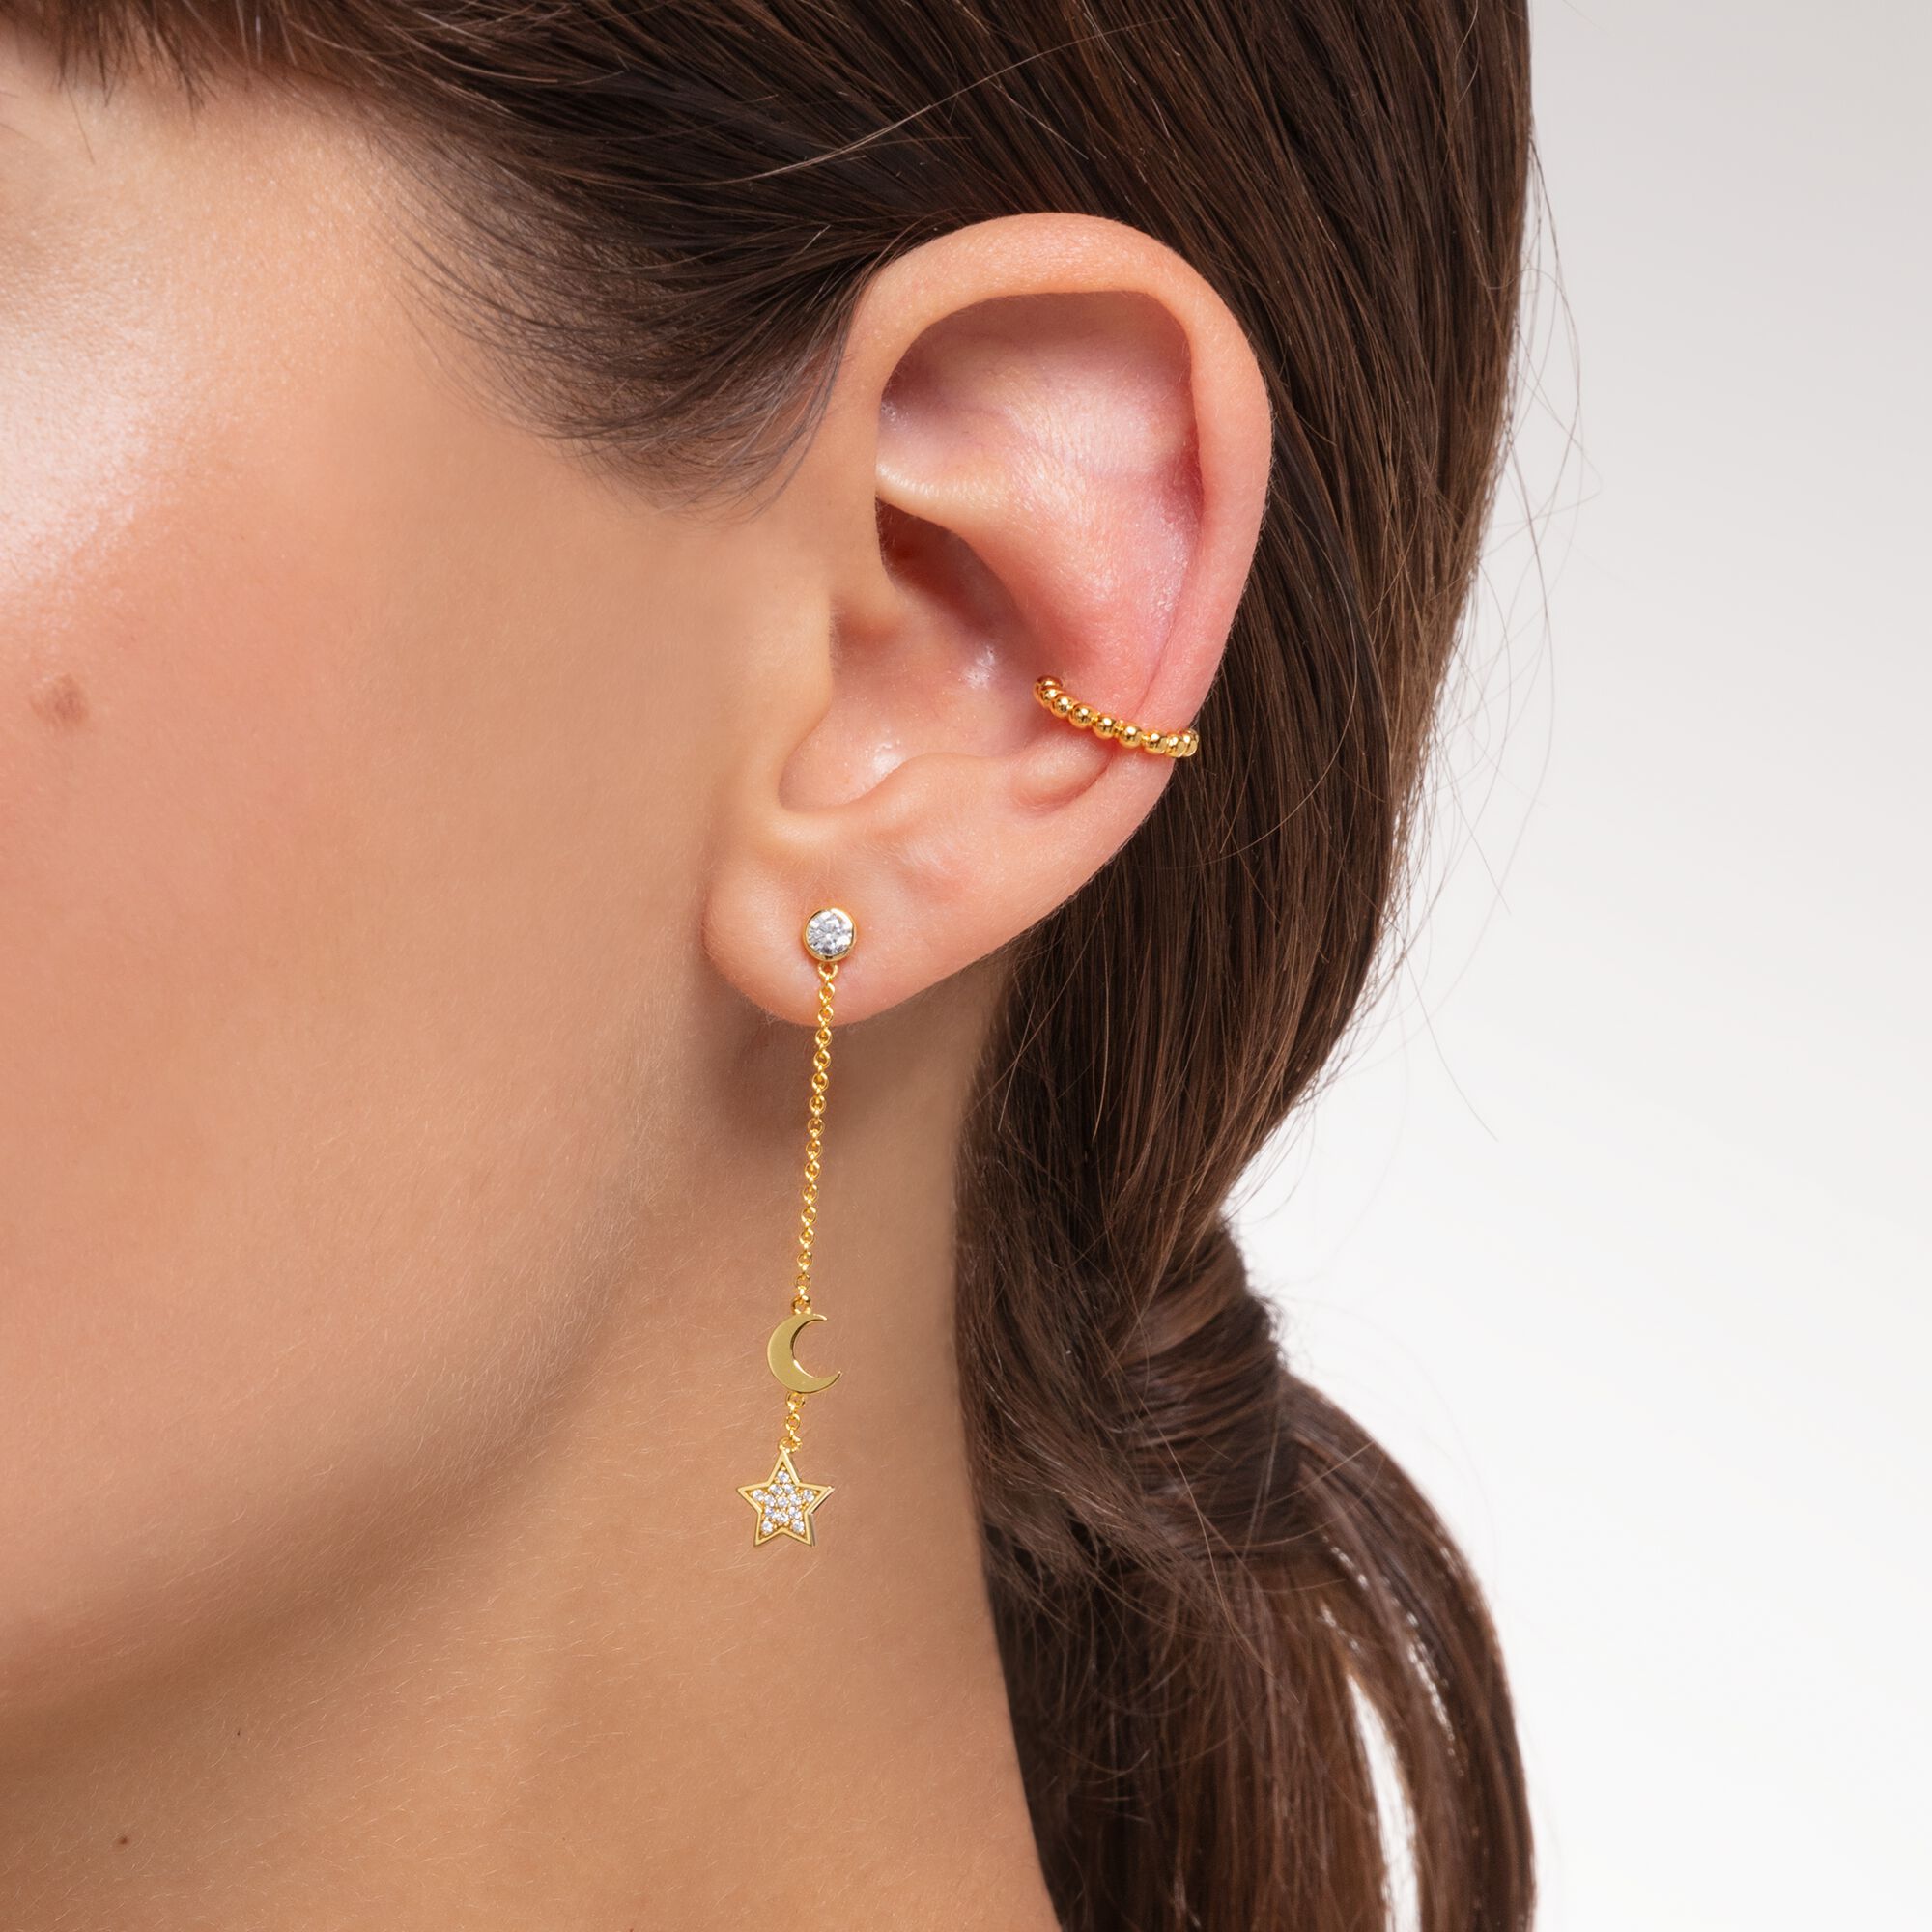 Thomas Sabo + Single Gold Star and Moon Earring